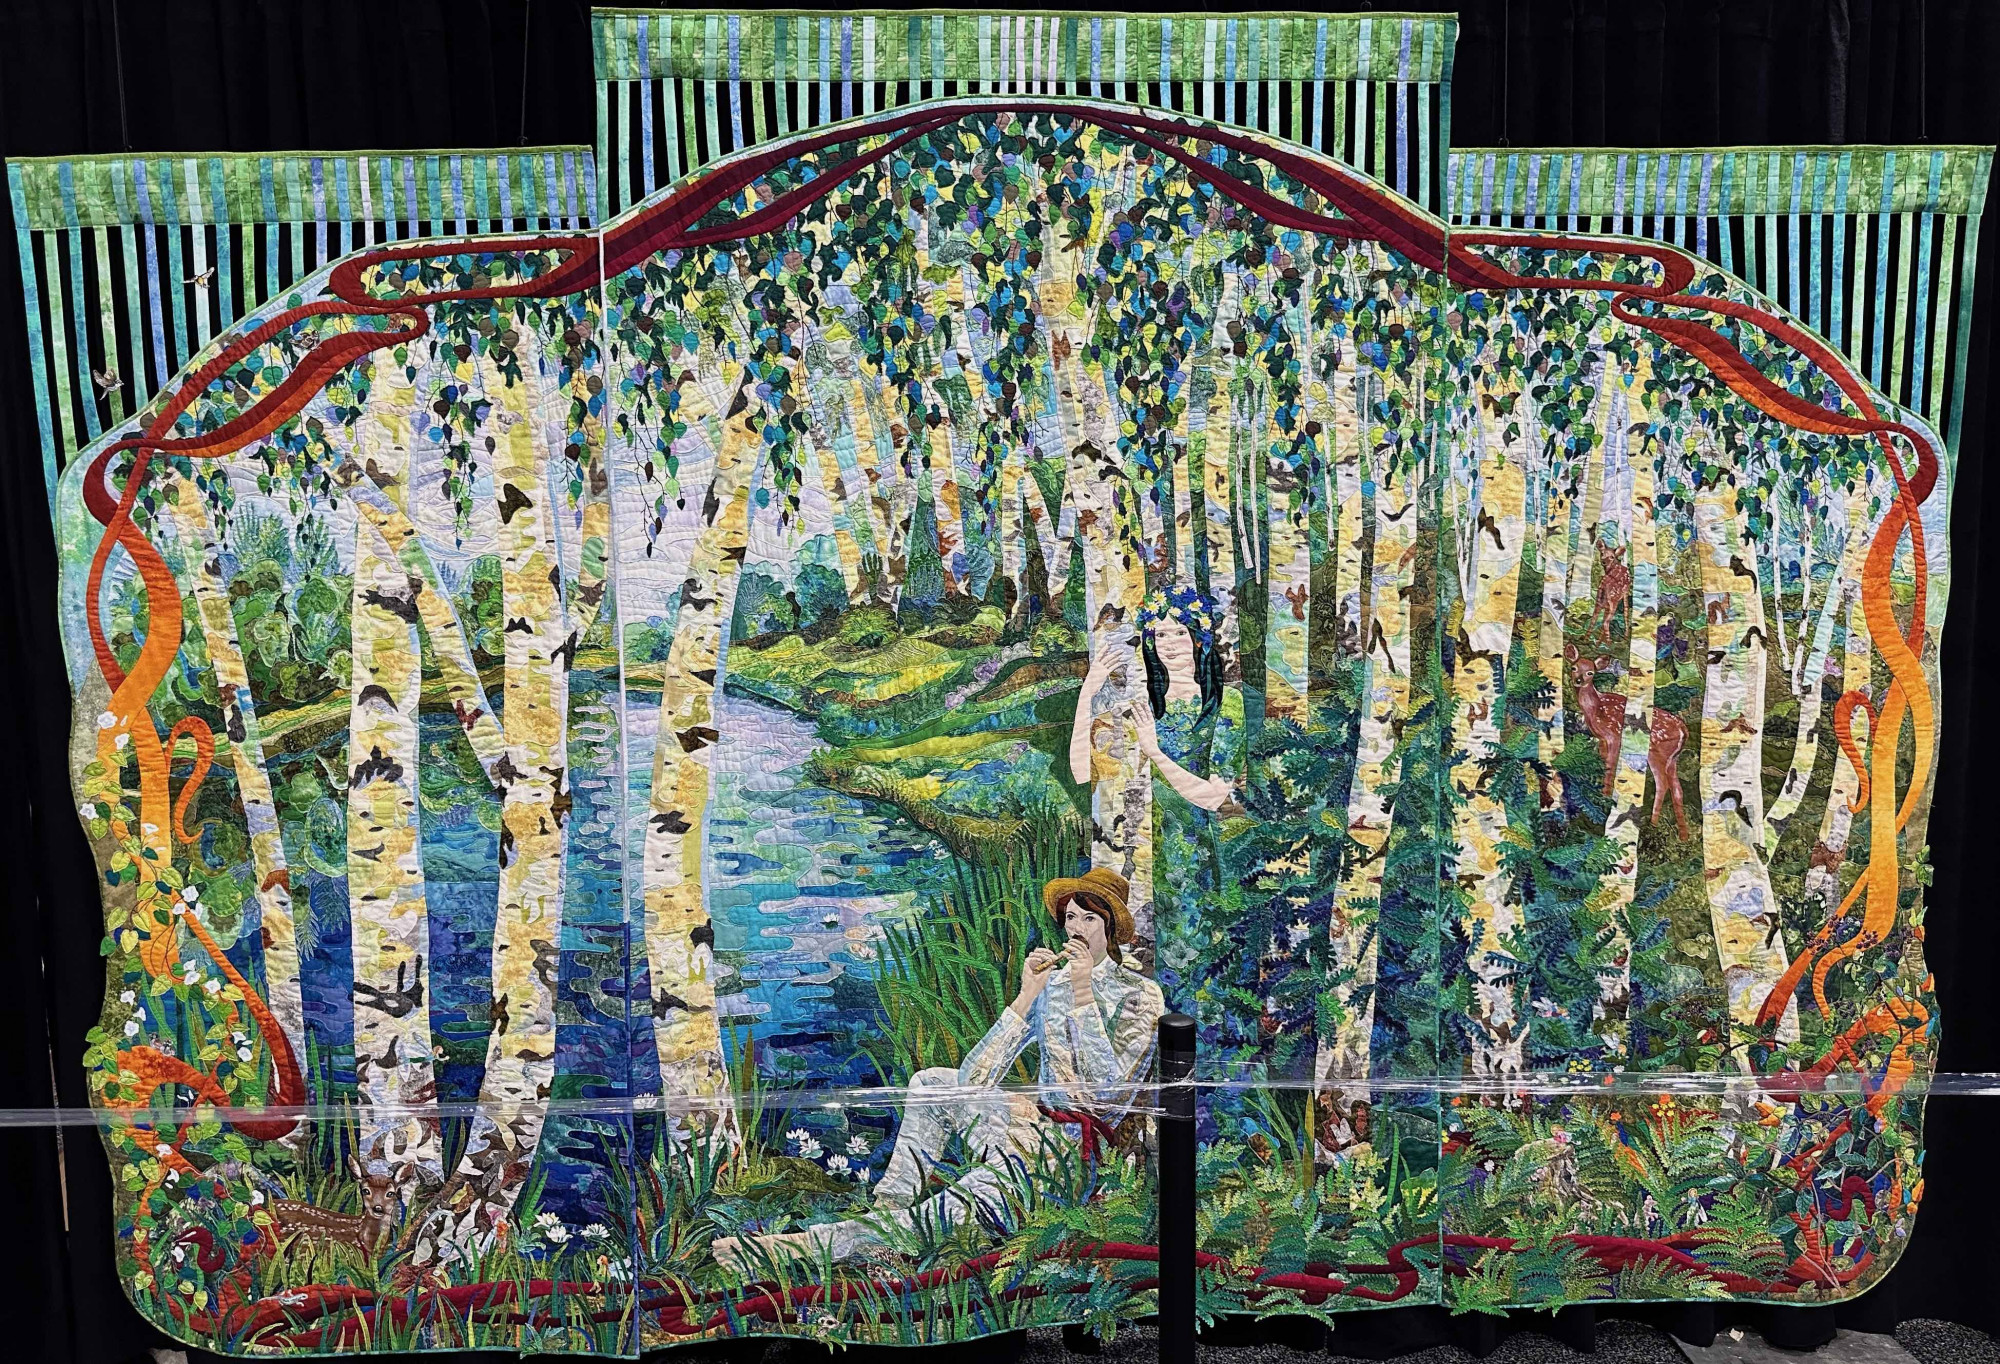 Magical Gate of Forest Song by Nina Yanchukovska